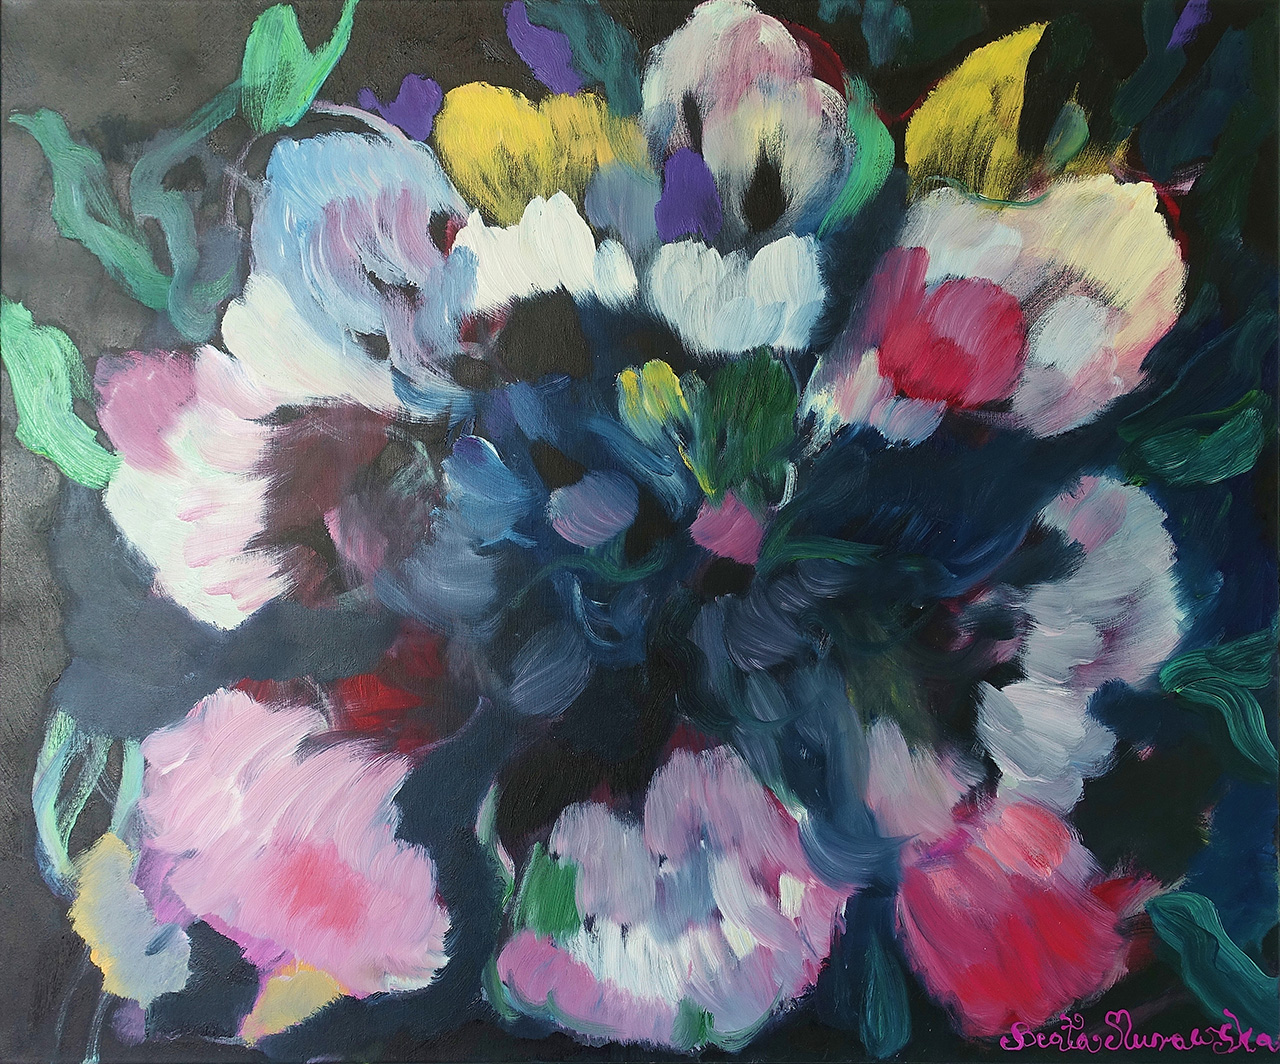 Beata Murawska - Wild Rose (Oil on Canvas | Size: 126 x 106 cm | Price: 12000 PLN)